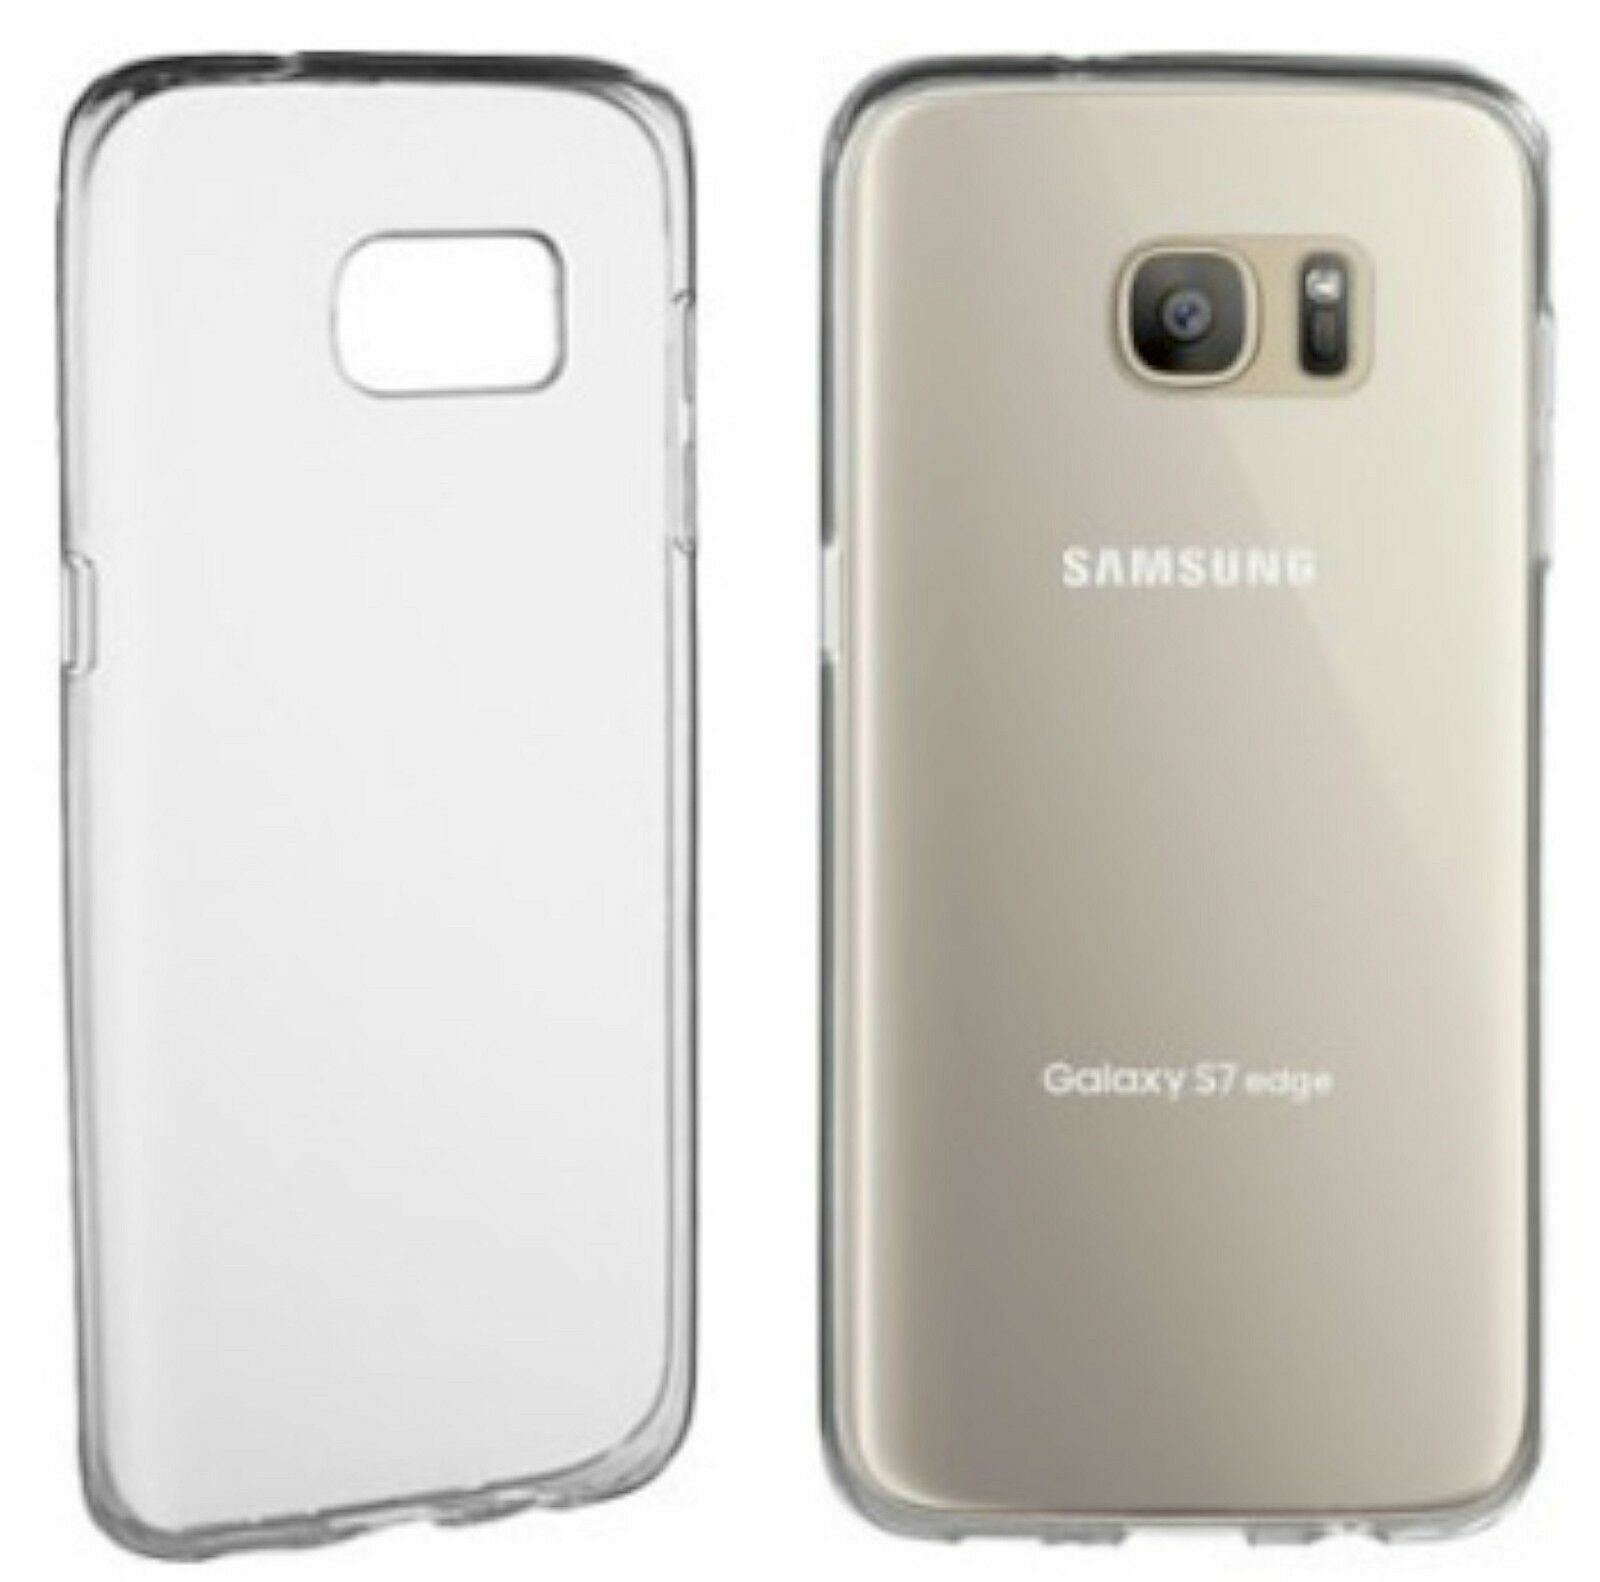 NEW Insignia Samsung Galaxy S7 Edge CLEAR Cell Phone Case Soft NS-MSGS7EPTC Grip - $4.65